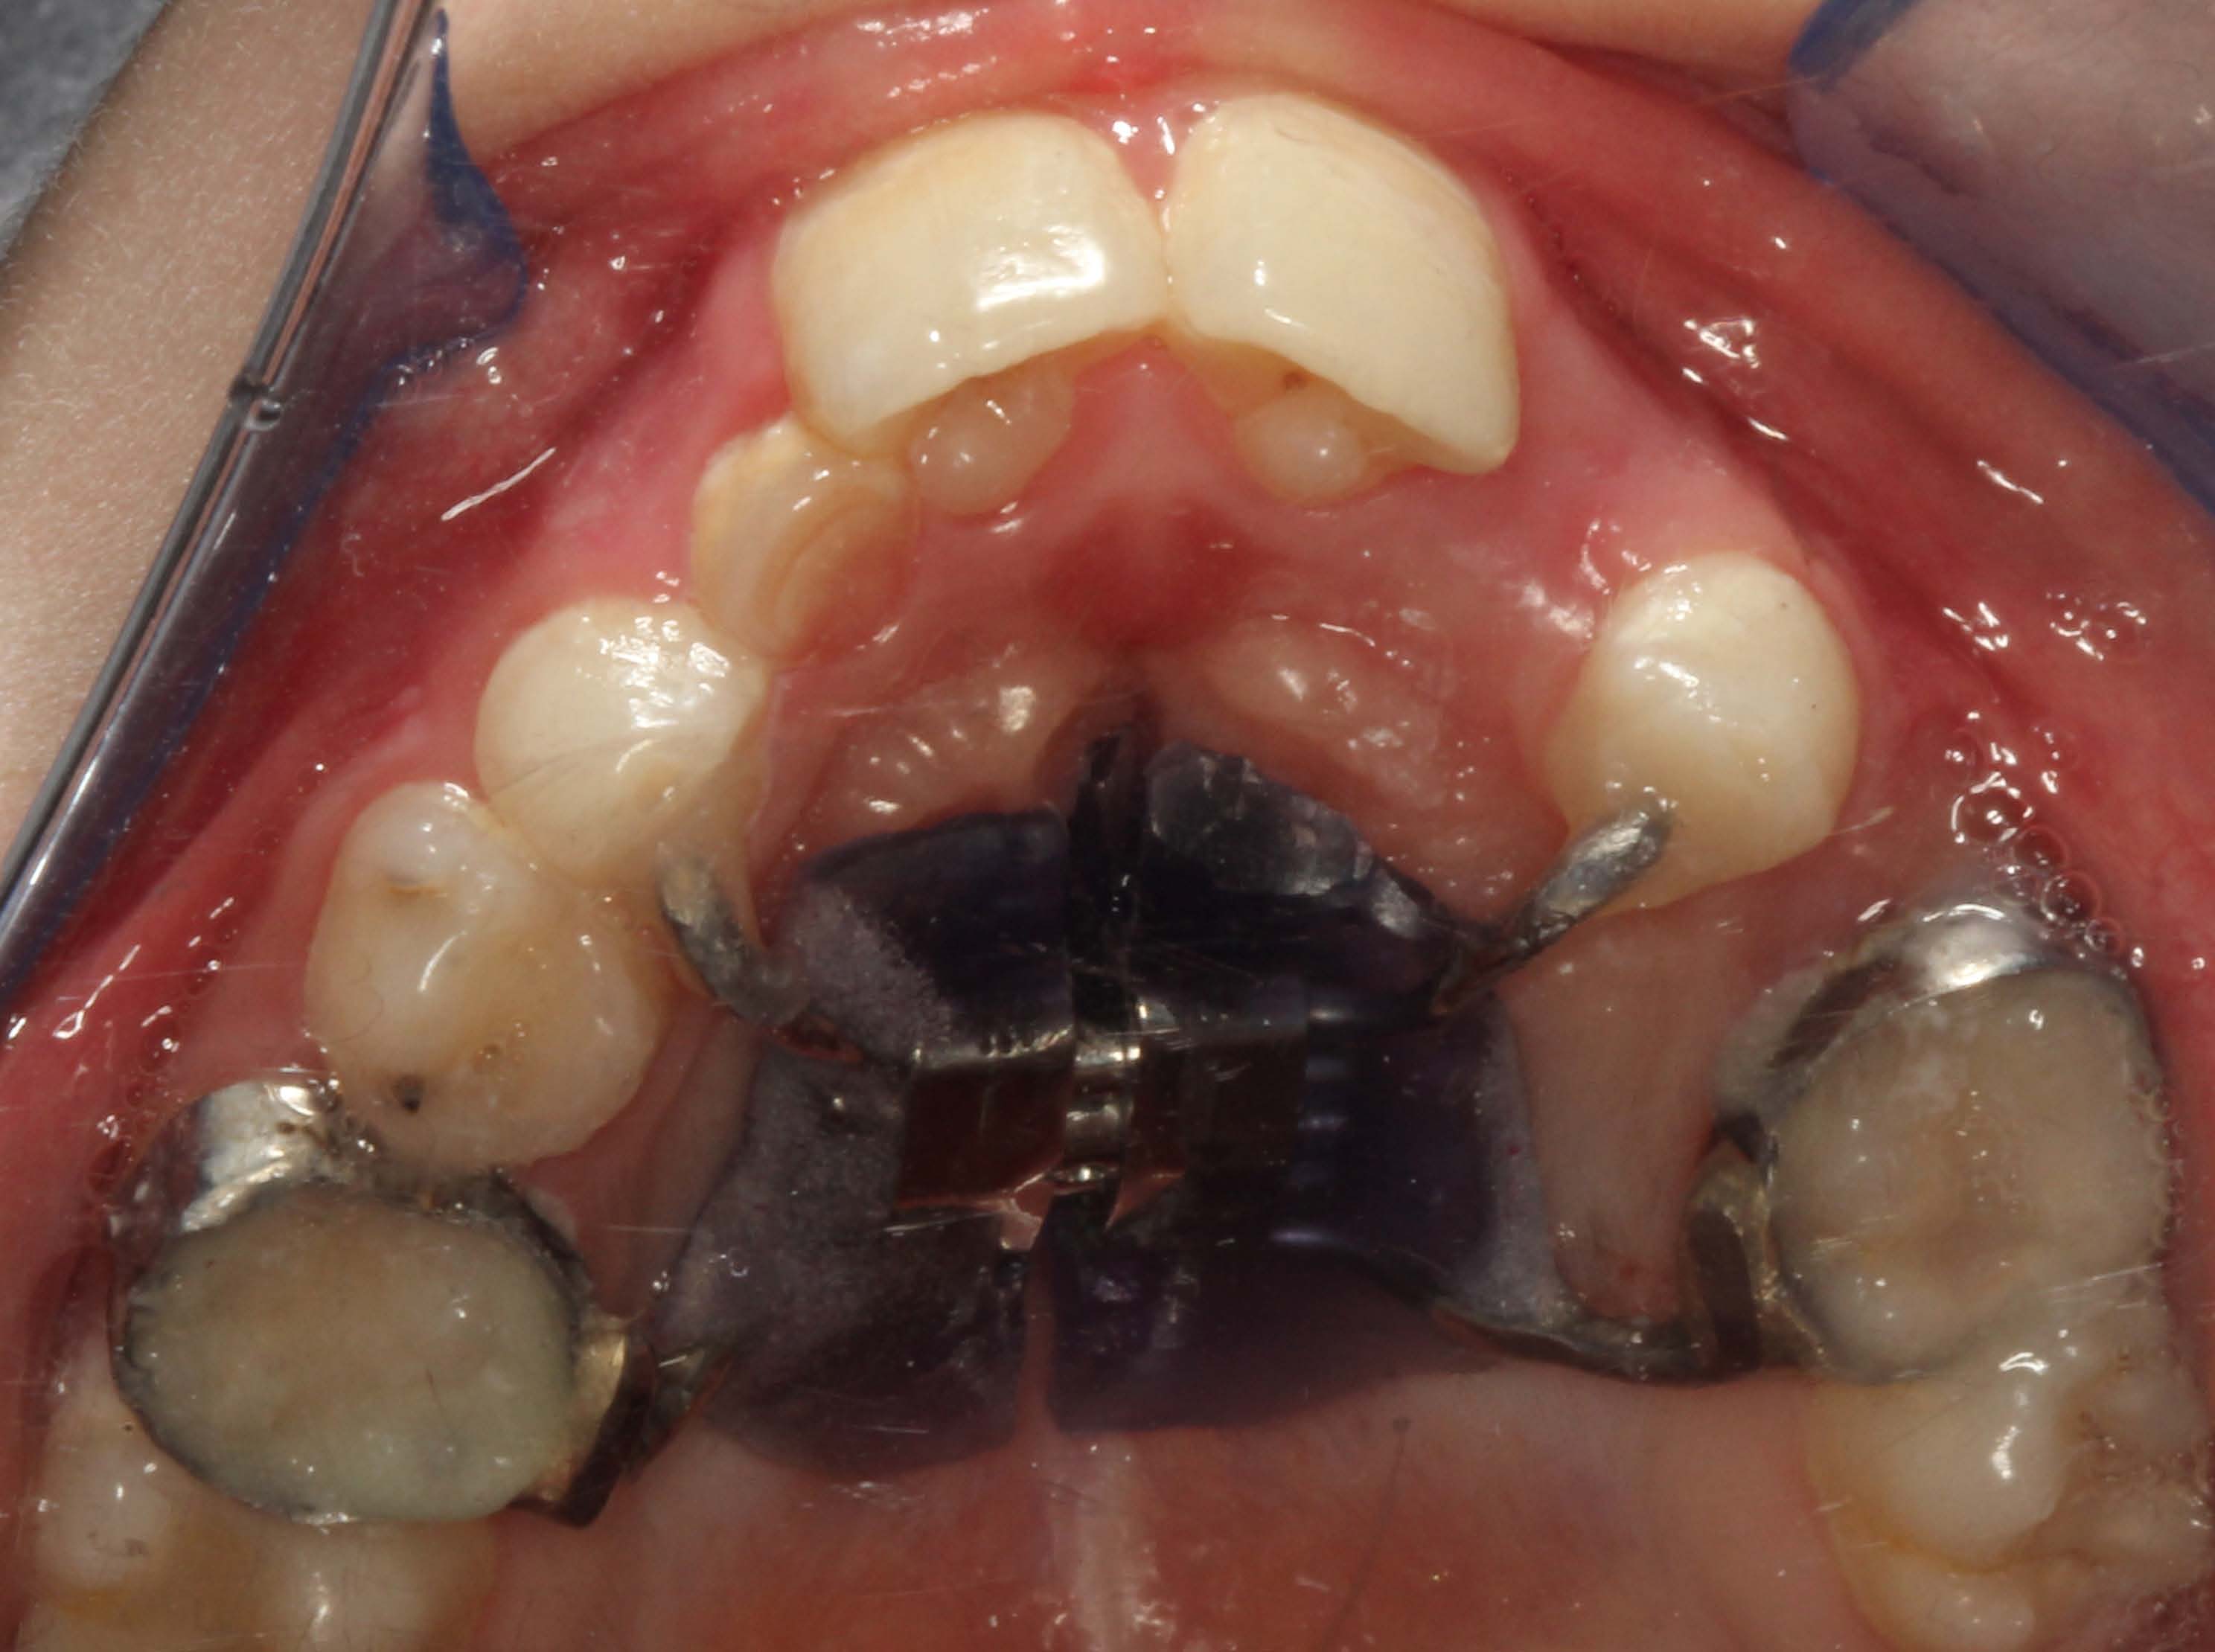 JCDR - Rubinstein Taybi Syndrome, Oro-facio-dental findings